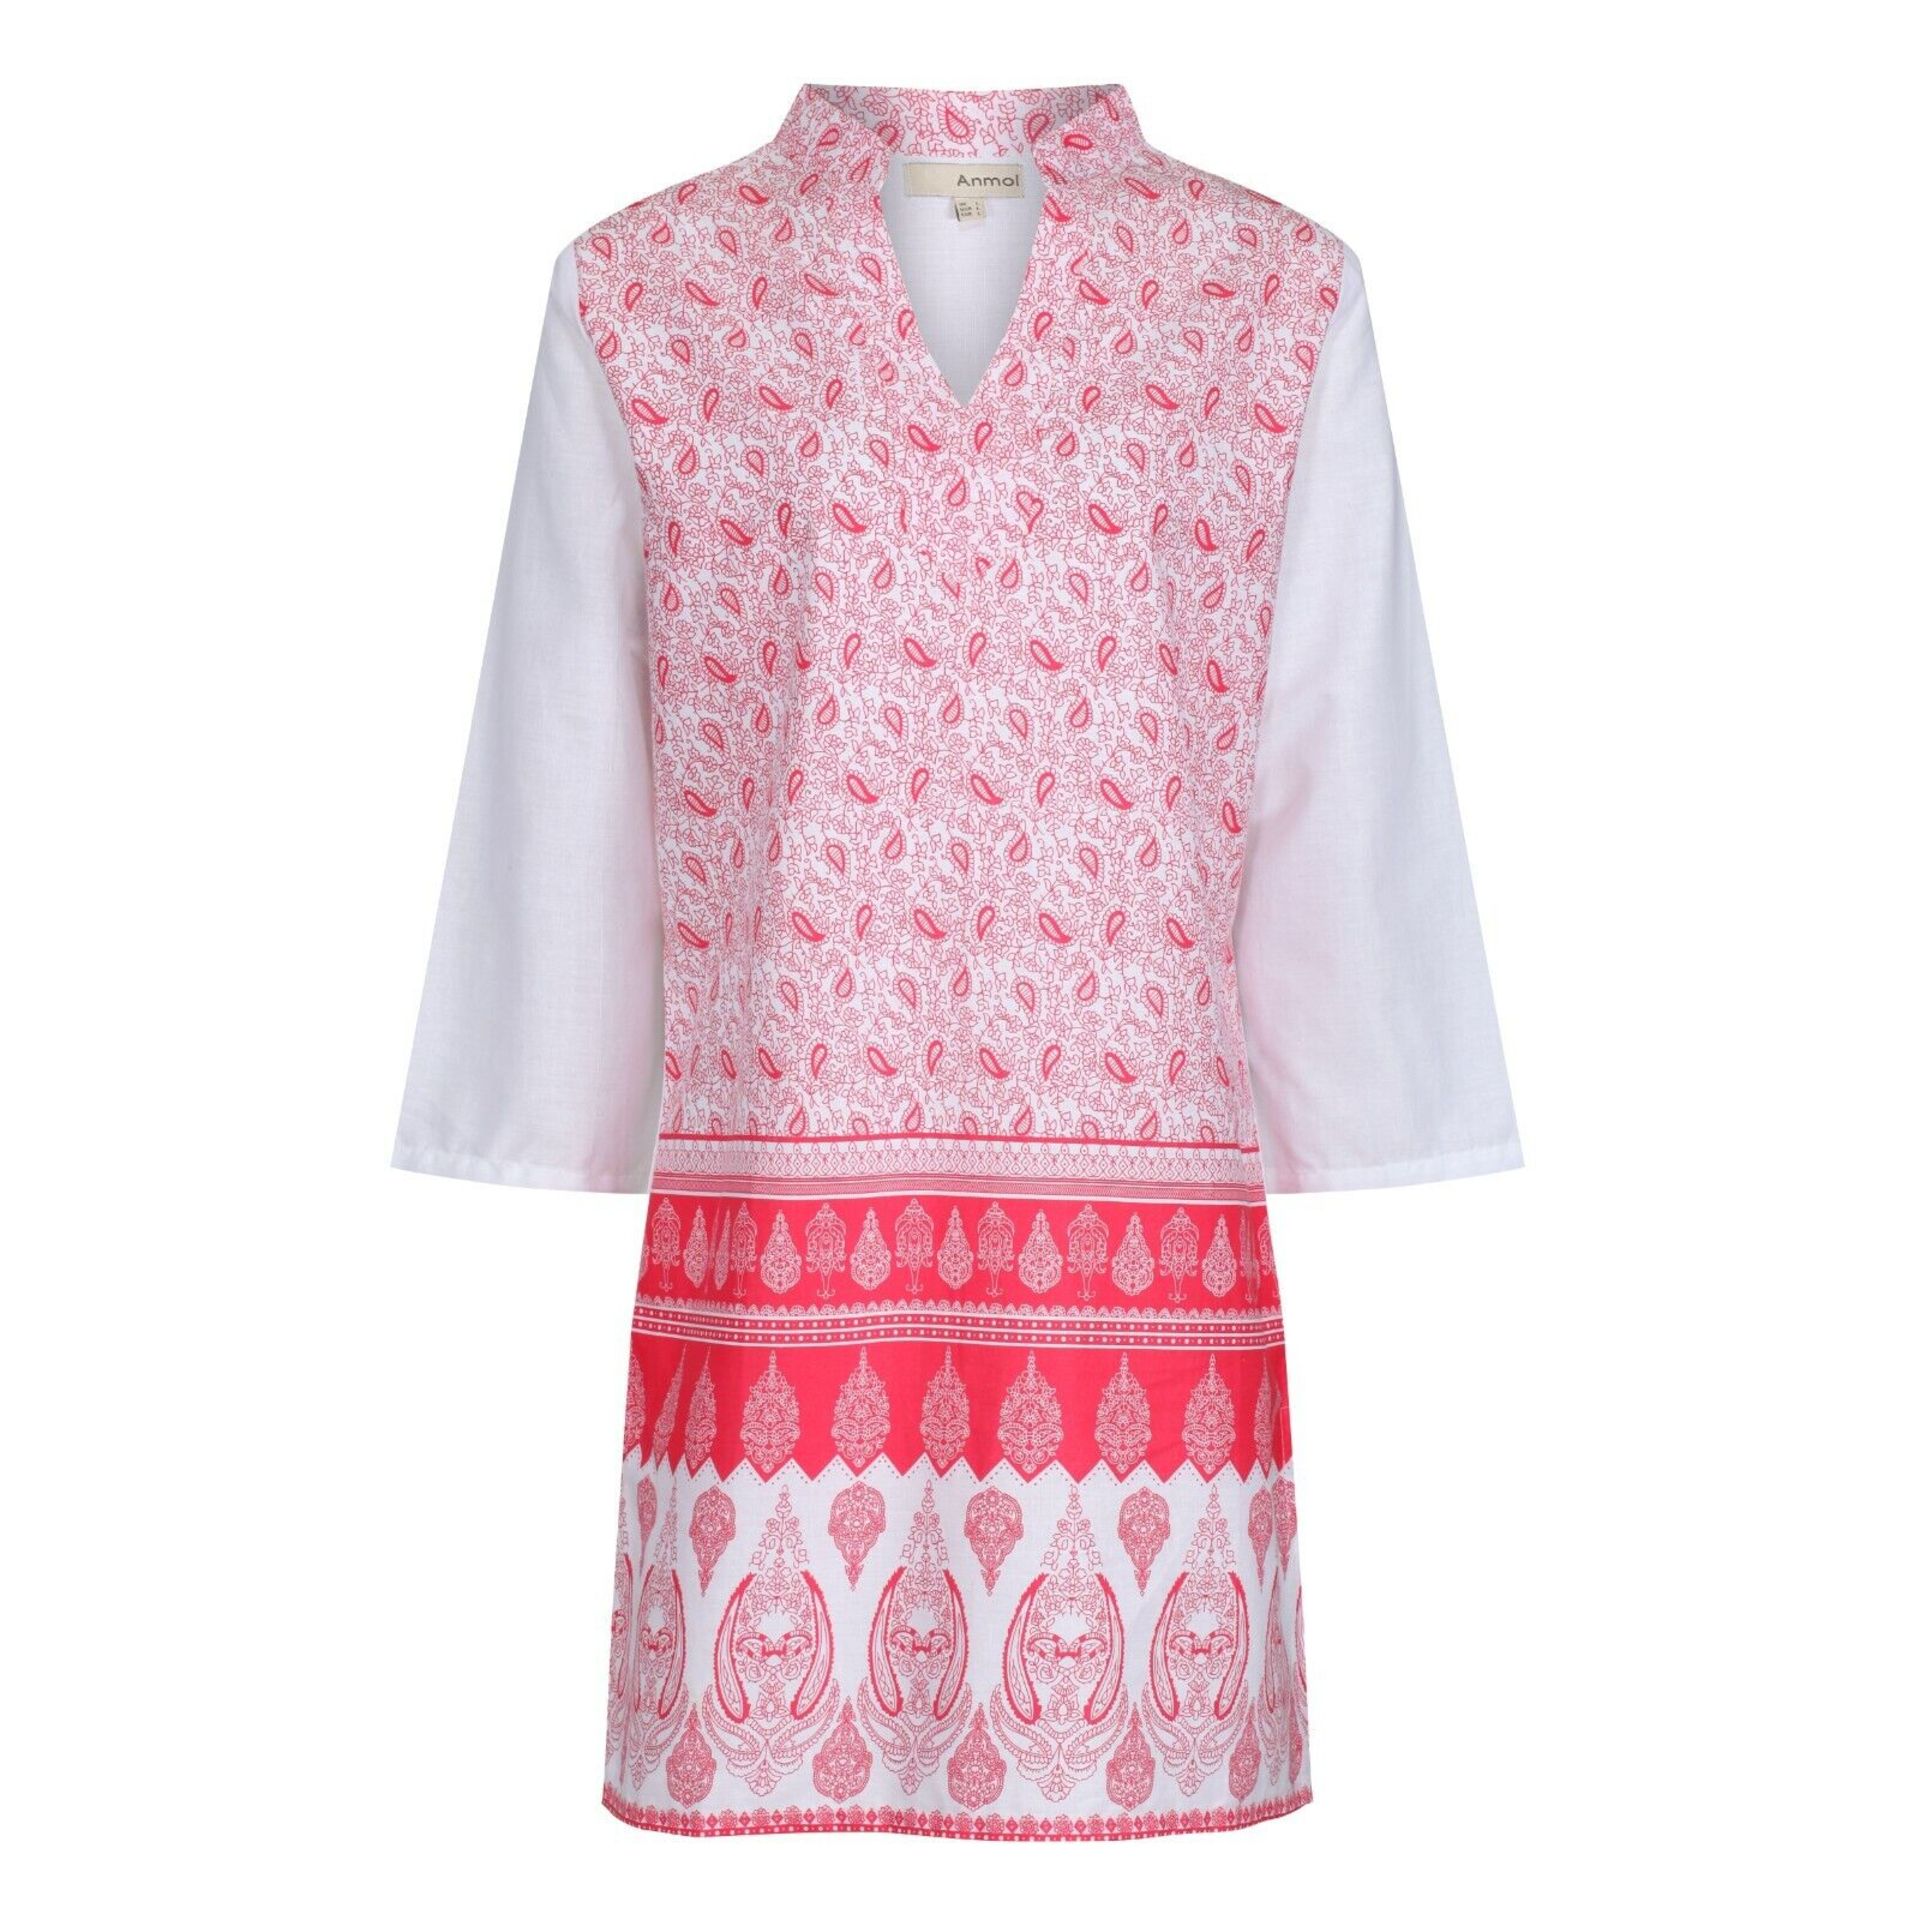 50 x New Women's Cotton Kaftan Tunics Summer Ladieswear Clothing Clothes Fashion - Image 5 of 7